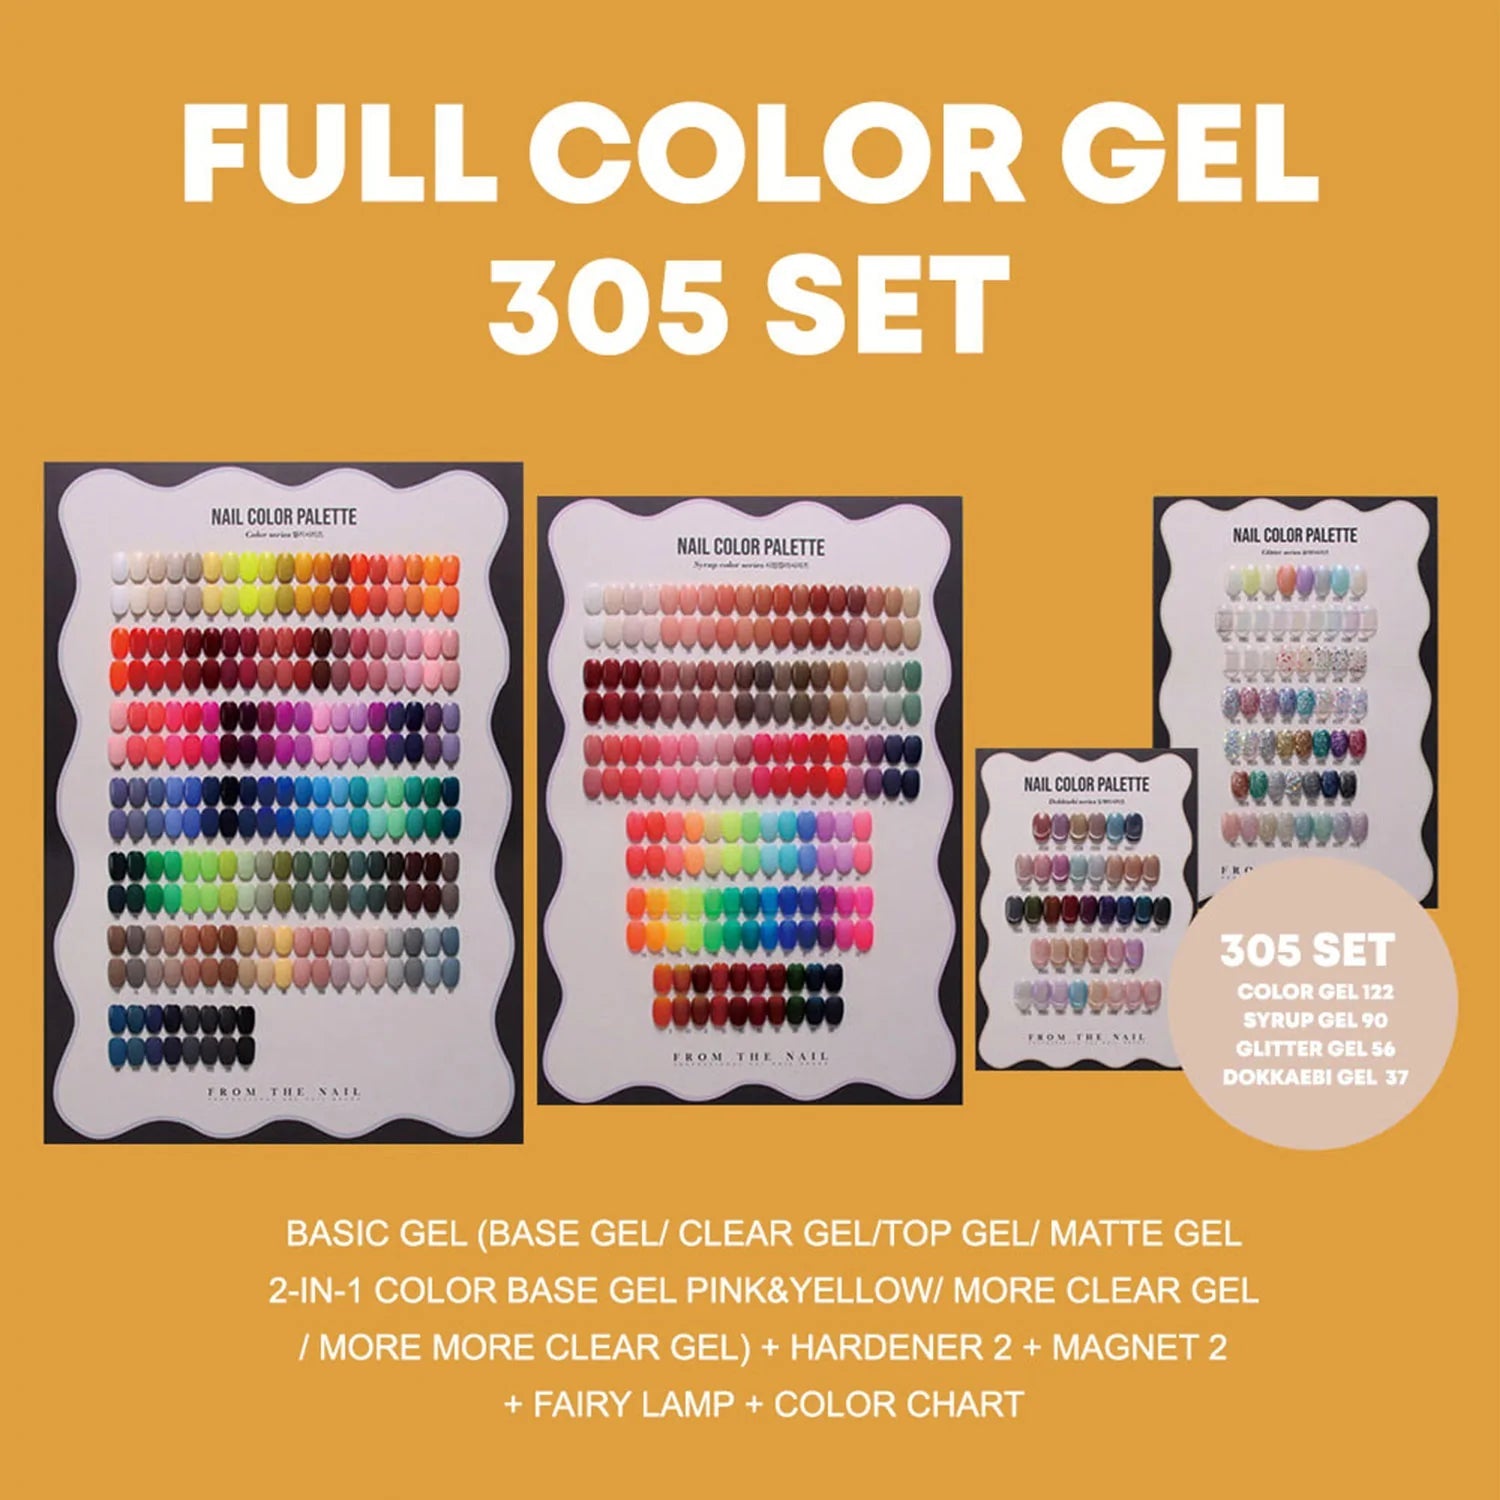 Fgel 305 Colour Full Set Promotion